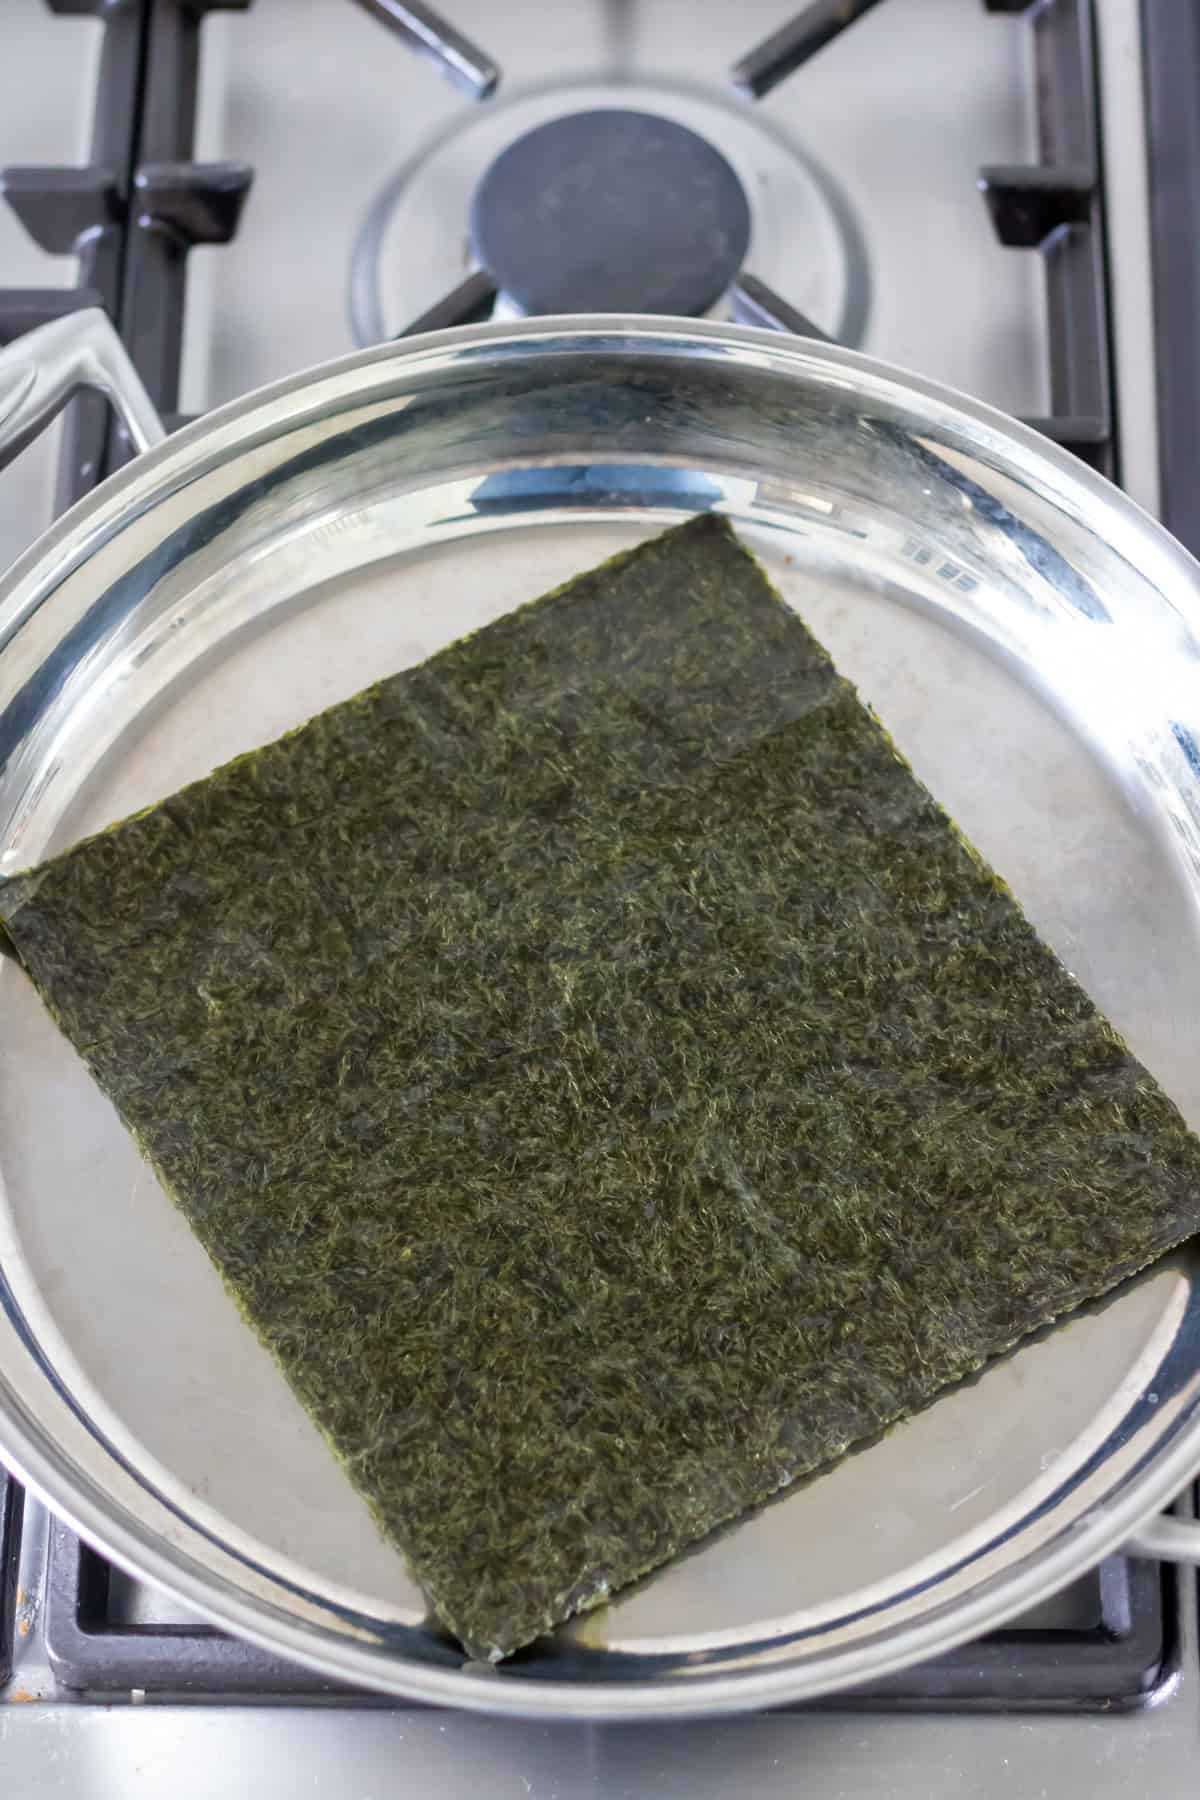 Toasting nori seaweed in a skillet.